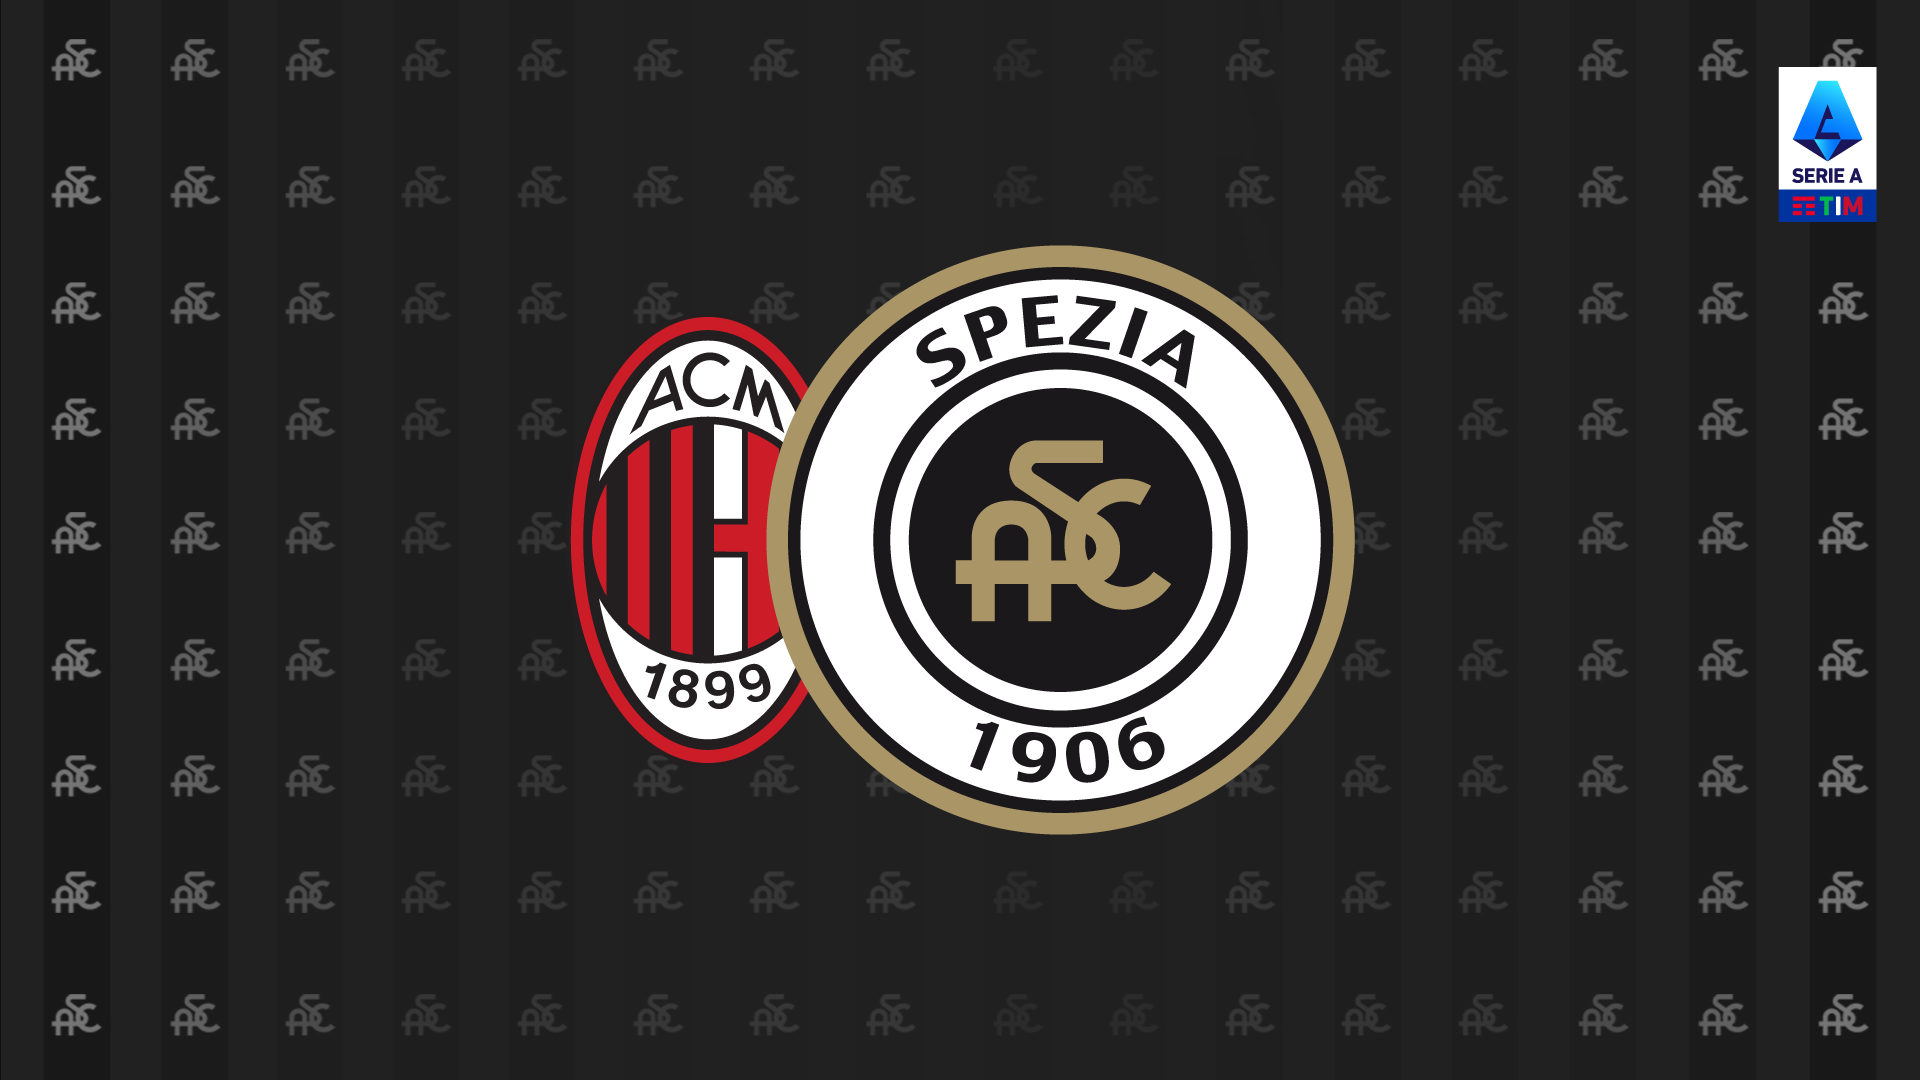 Milan-Spezia: pre-sale available